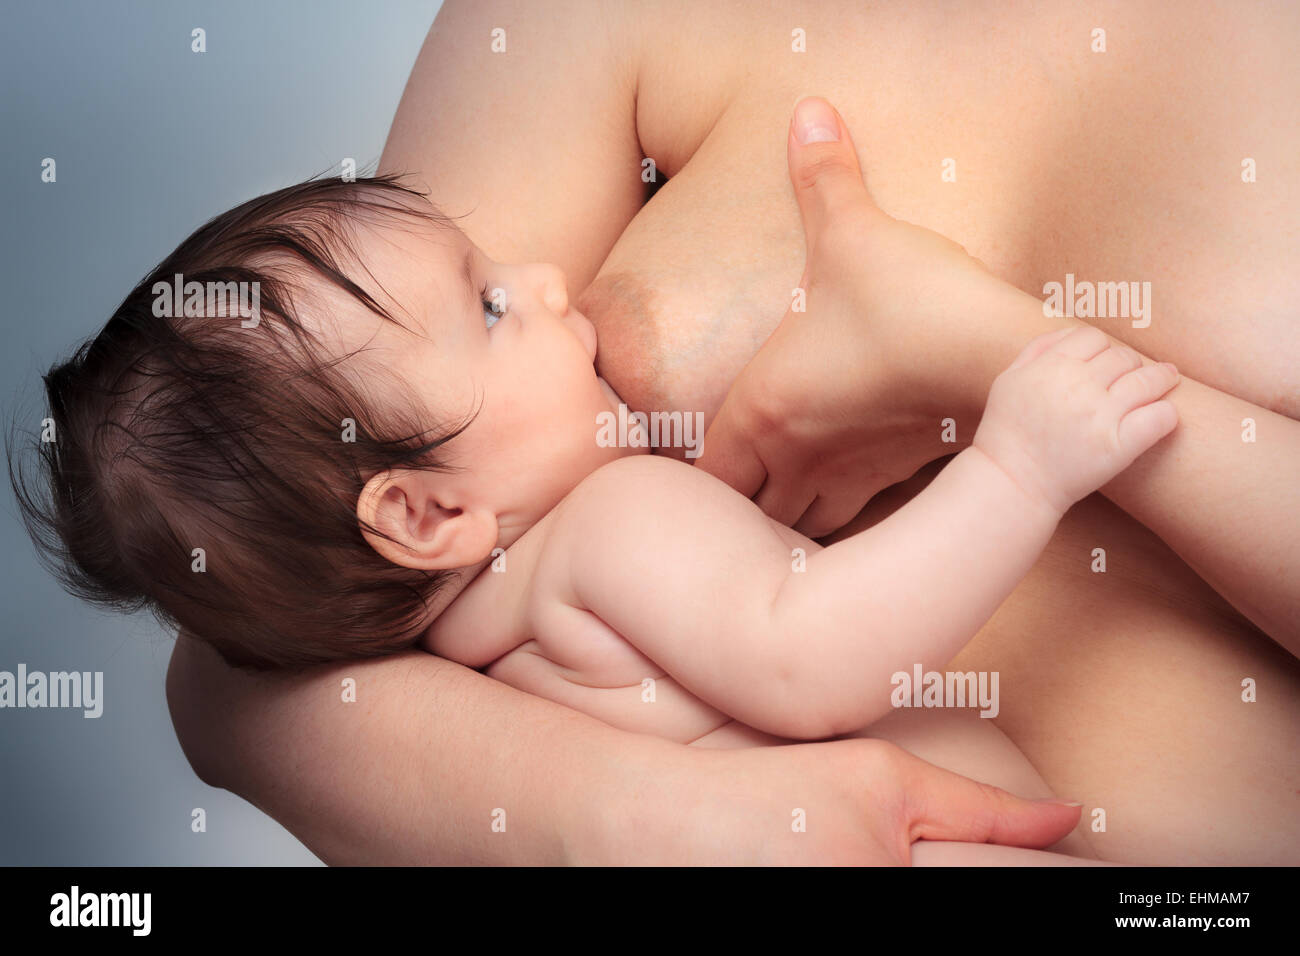 Chrissy Teigen, Kelly Rowland: Celebs Talk Breastfeeding